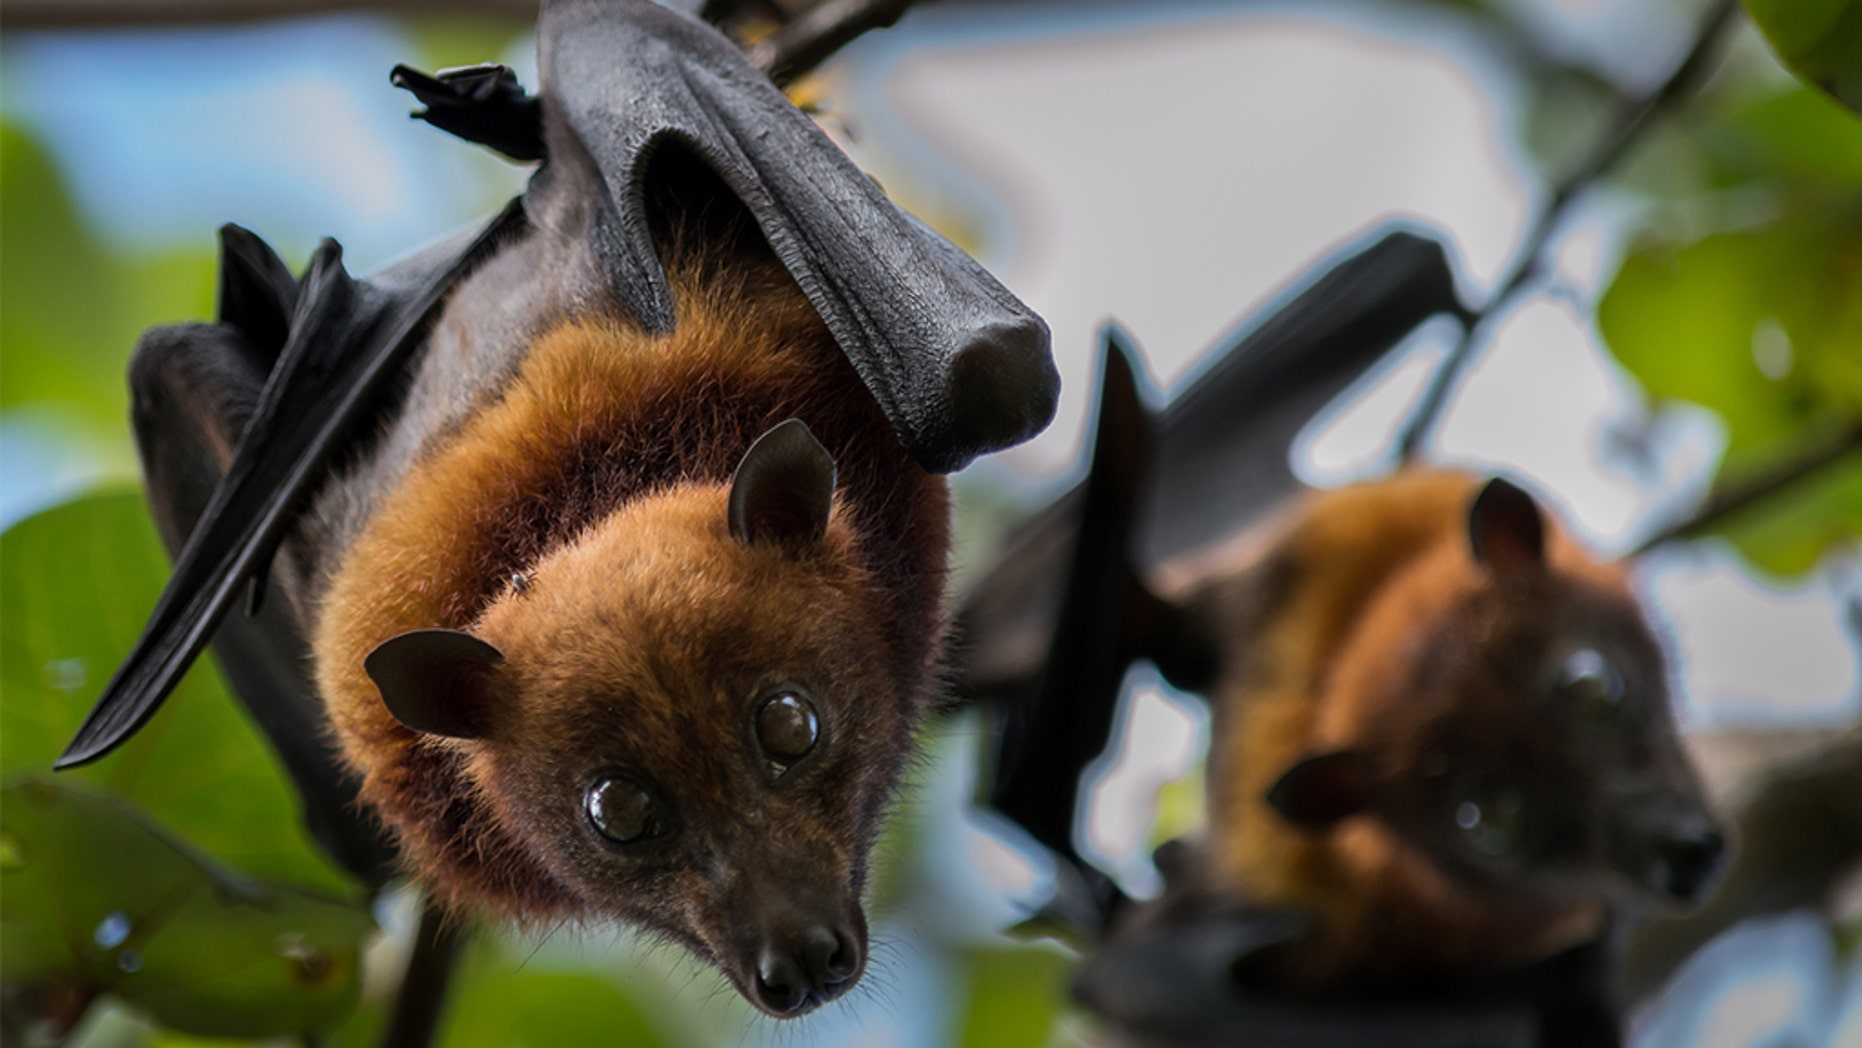 Beware of Měnglà: New virus similar to Ebola found in bats in China | Fox News